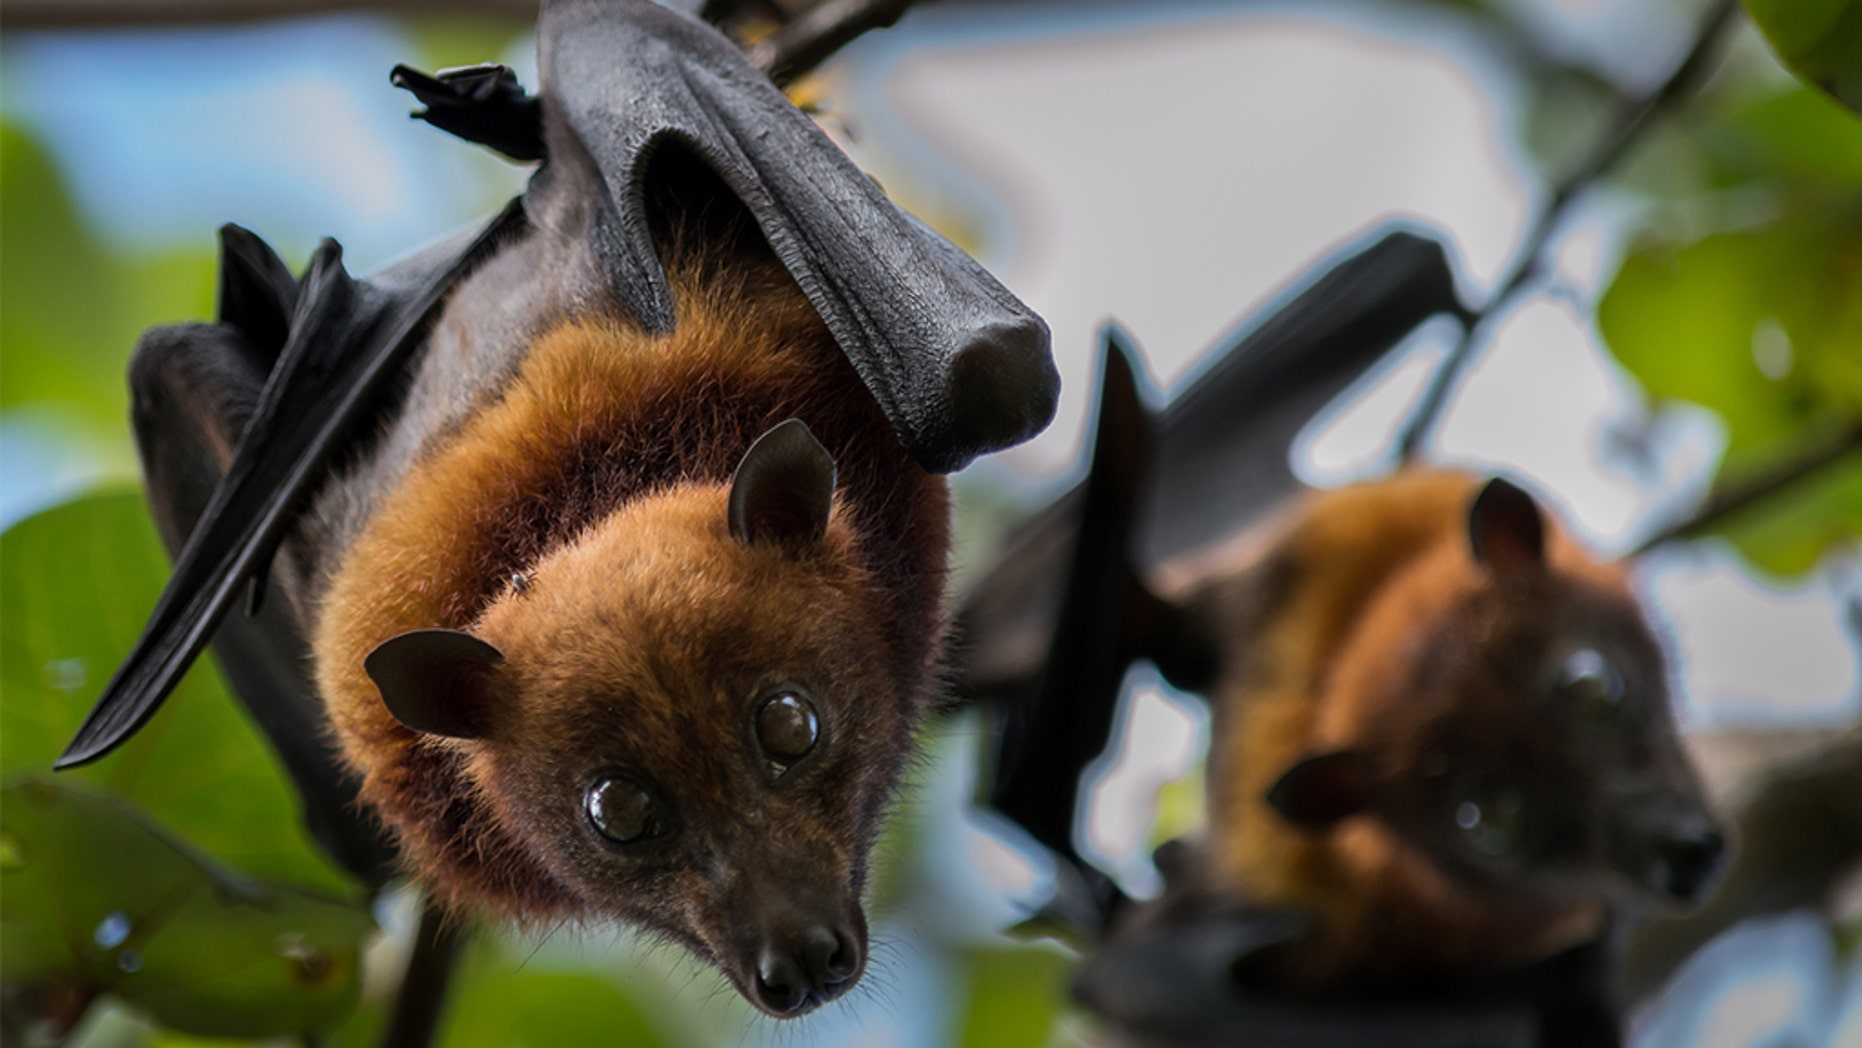 Beware of Měnglà: New virus similar to Ebola found in bats in China | Fox News